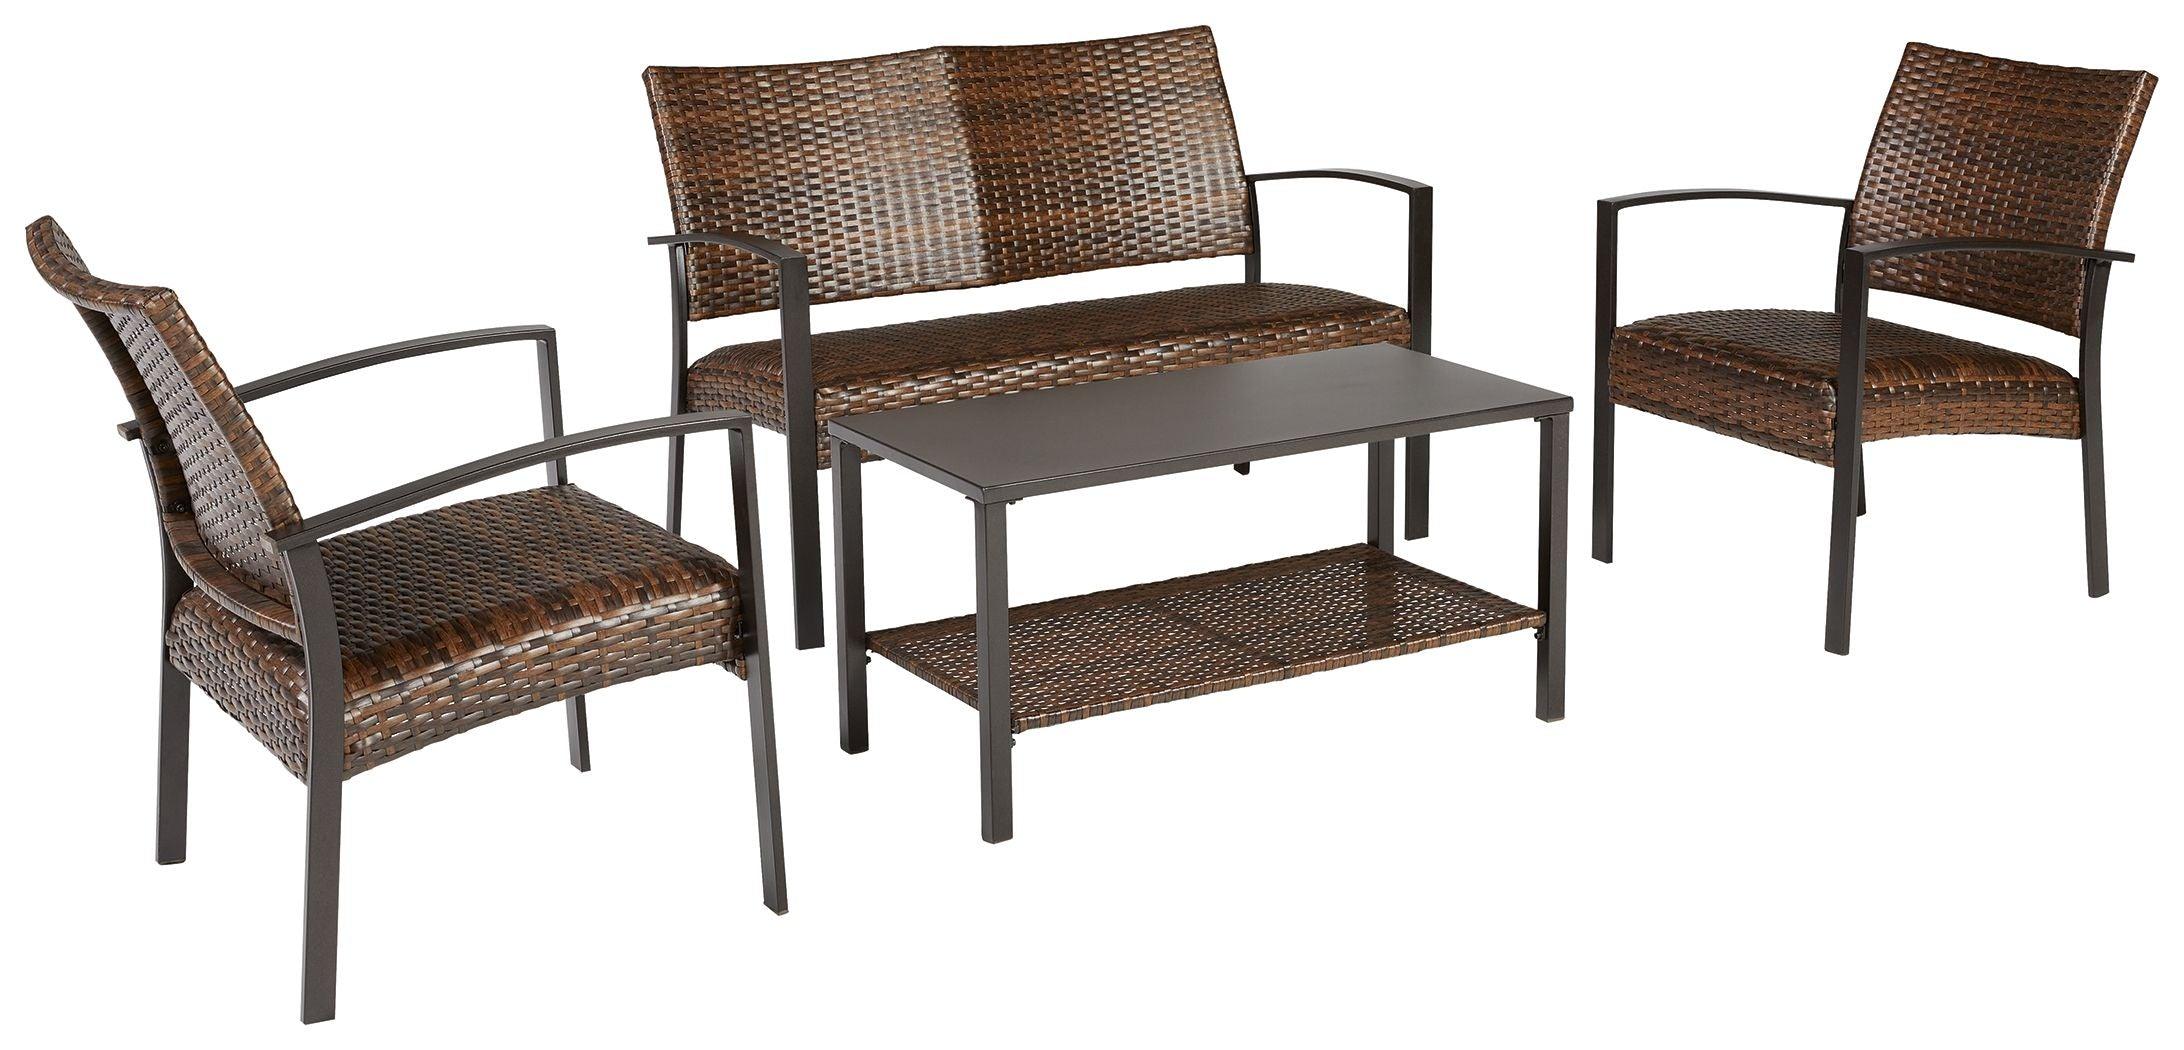 Ashley Furniture - Zariyah - Dark Brown - Love/Chairs/Table Set (Set of 4) - 5th Avenue Furniture